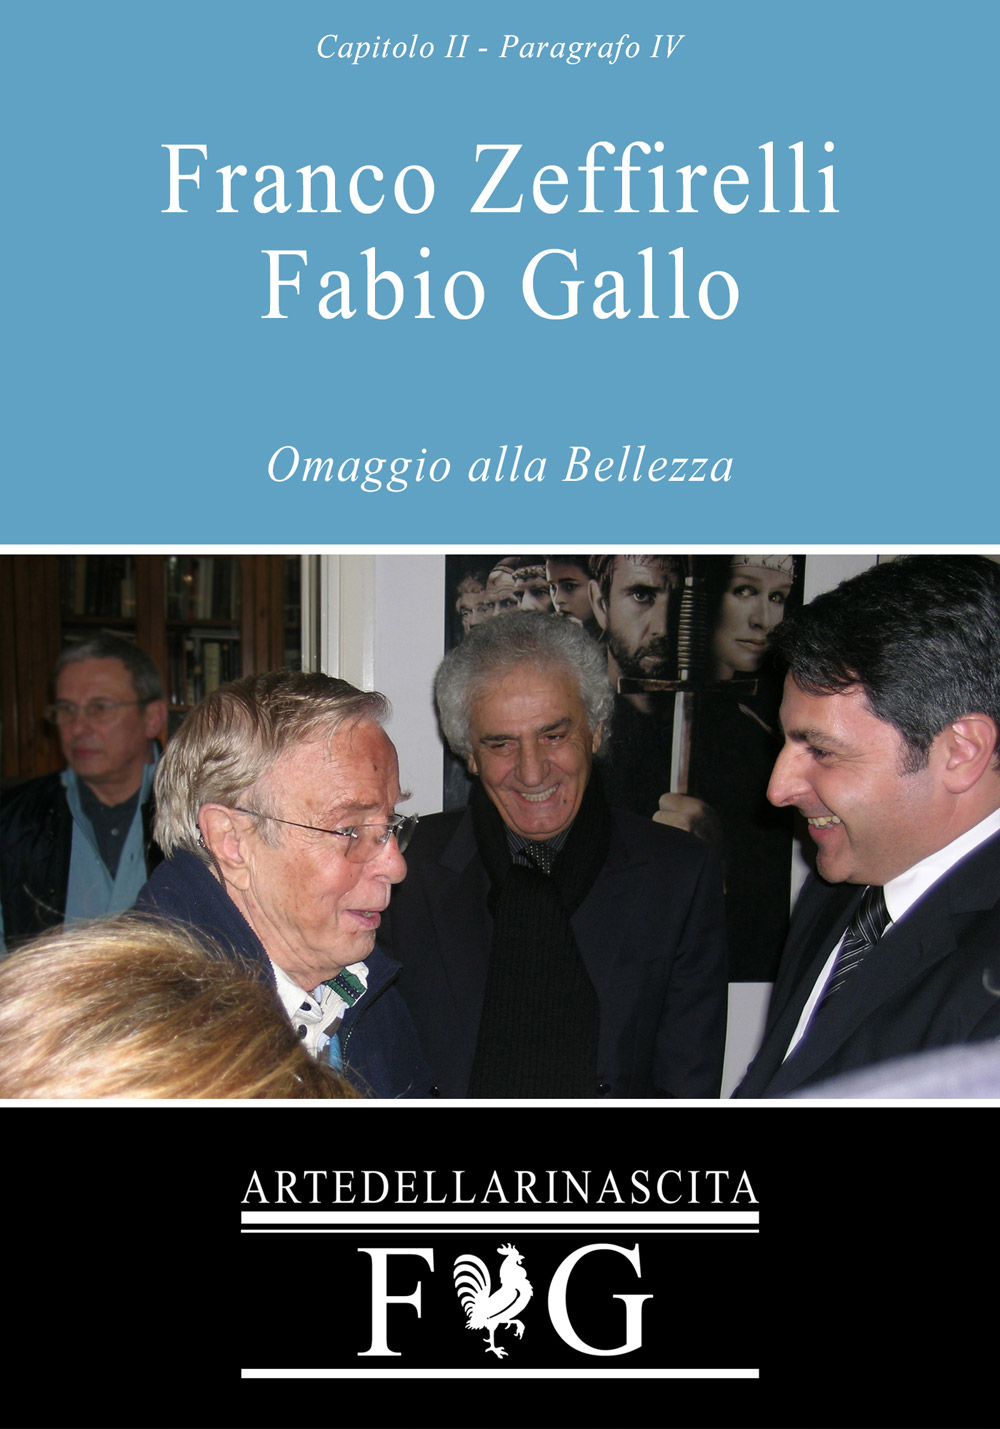 Fabio Gallo-Franco Zeffirelli-Beni Culturali-Arte-ItaliaExcelsa-CalabriaExcelsa